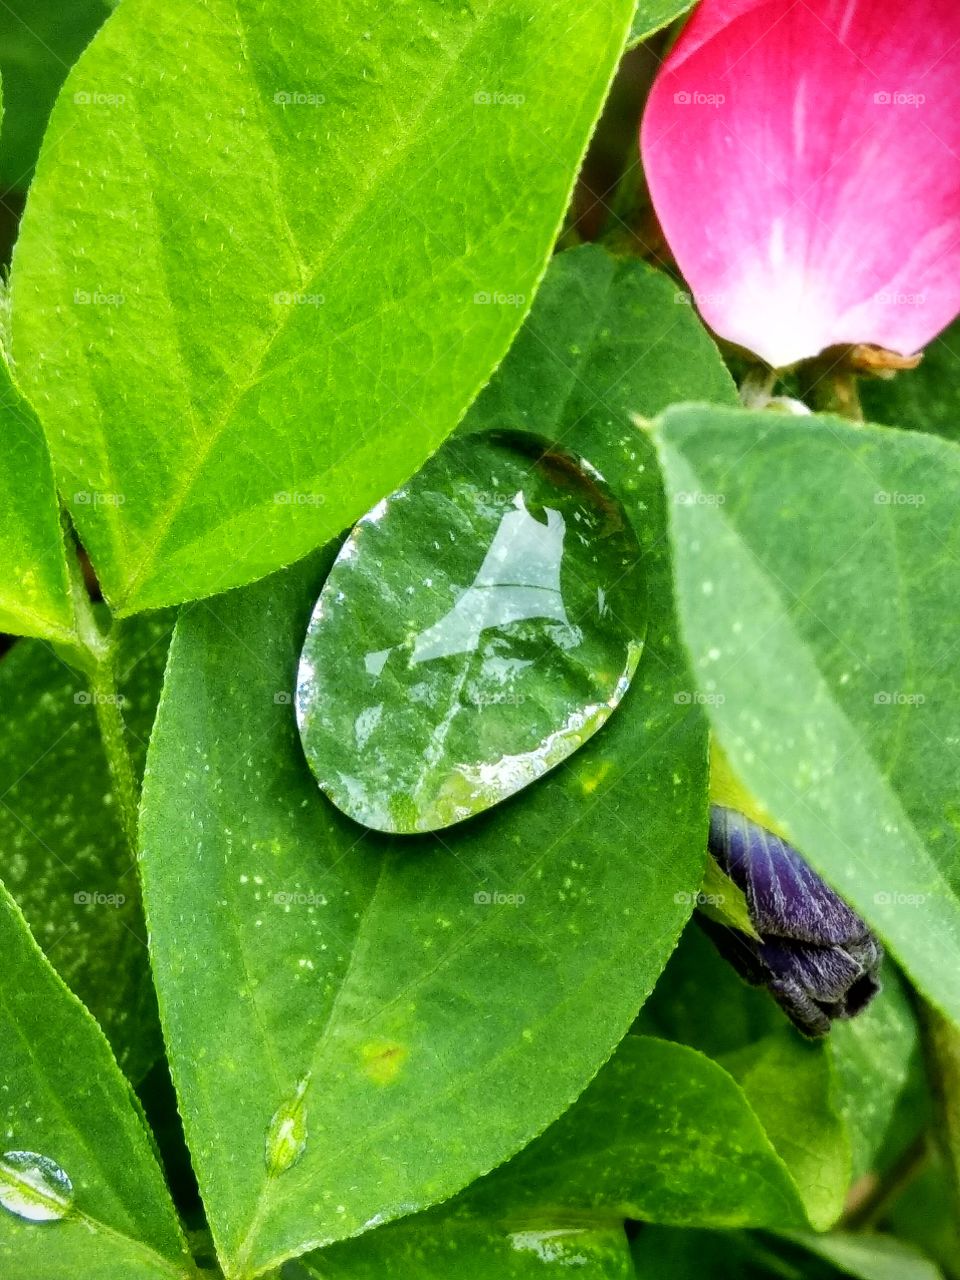 A small leaf holding a drop of rain ......!